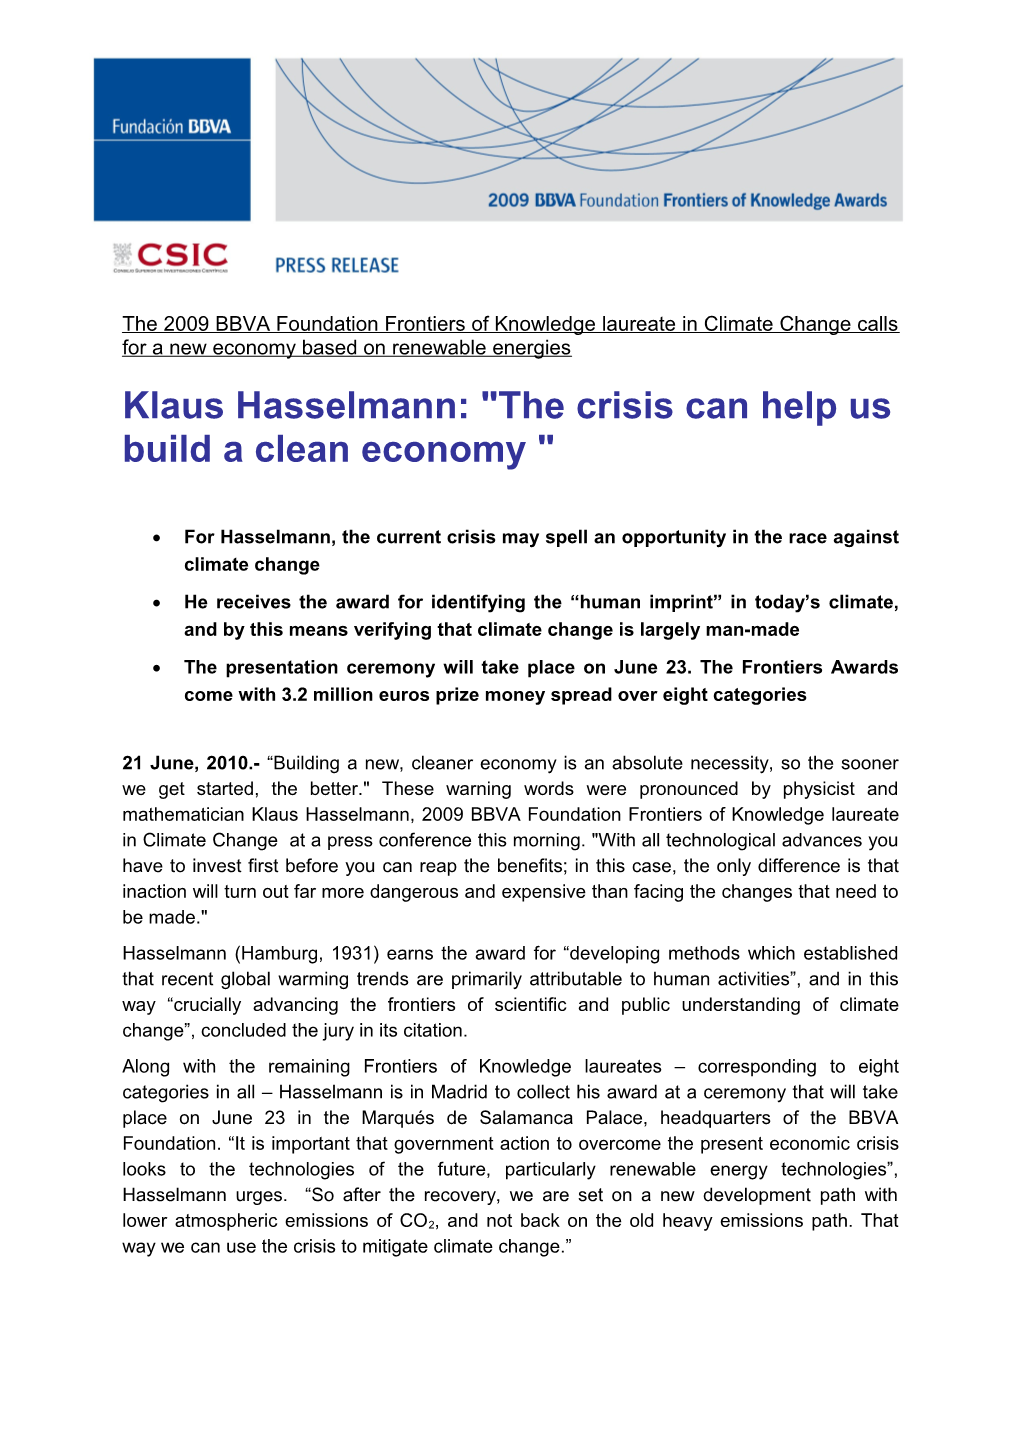 Klaus Hasselmann: the Crisis Can Help Us Build a Clean Economy